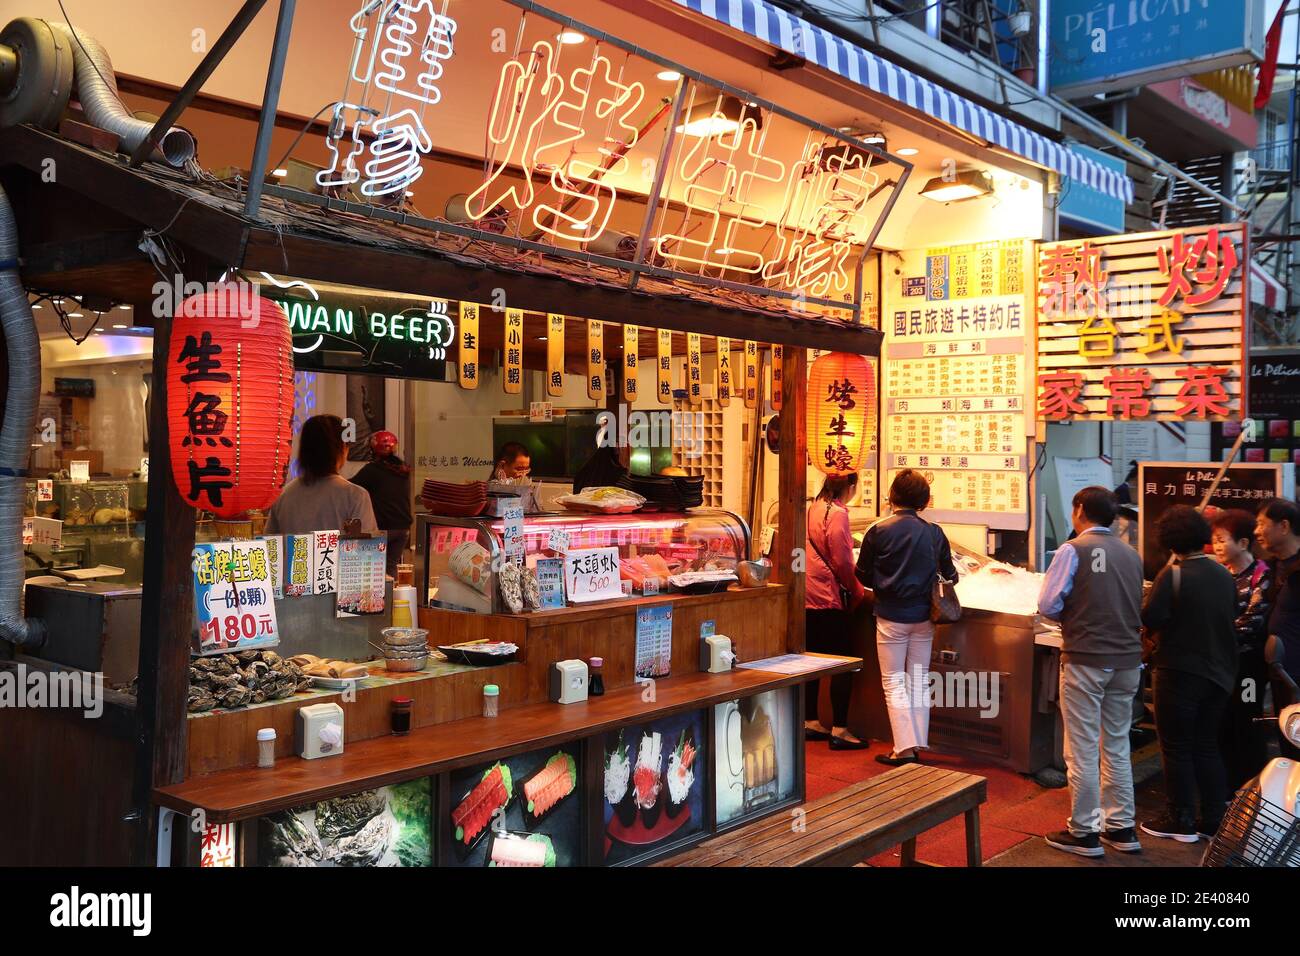 KENTING, TAIWAN - NOVEMBER 28, 2018: People visit sea food restaurant at Kenting Street Night Market in Taiwan. Night food markets are a big part of T Stock Photo